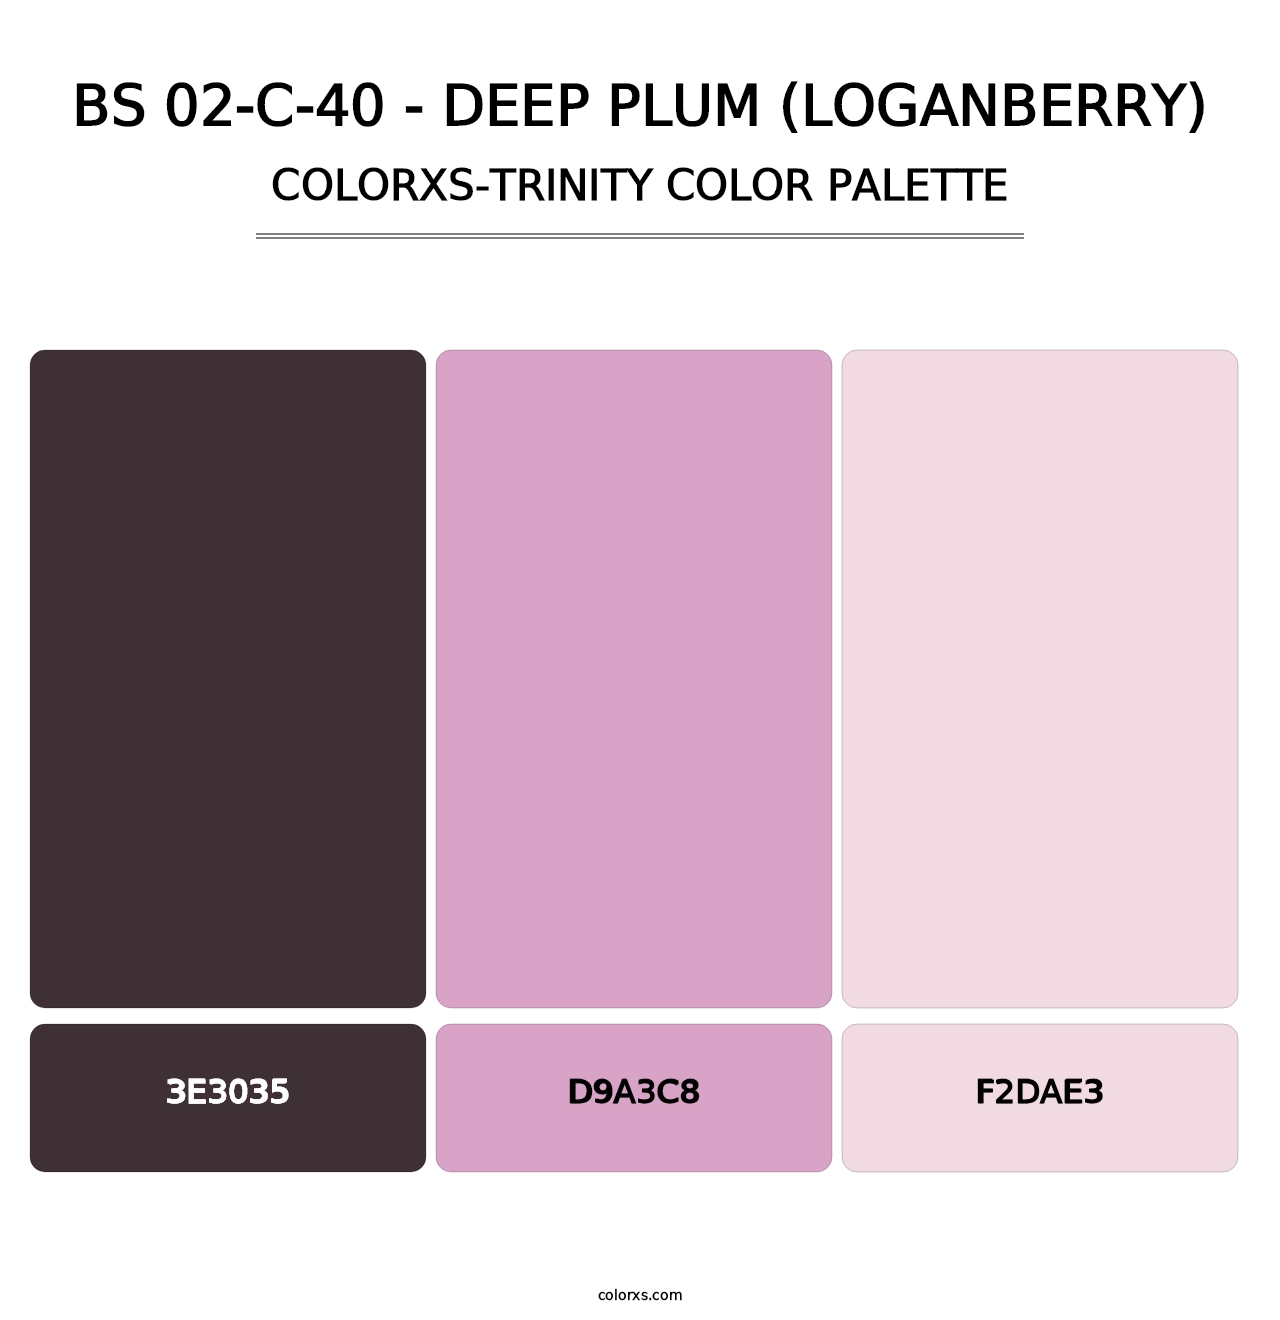 BS 02-C-40 - Deep Plum (Loganberry) - Colorxs Trinity Palette